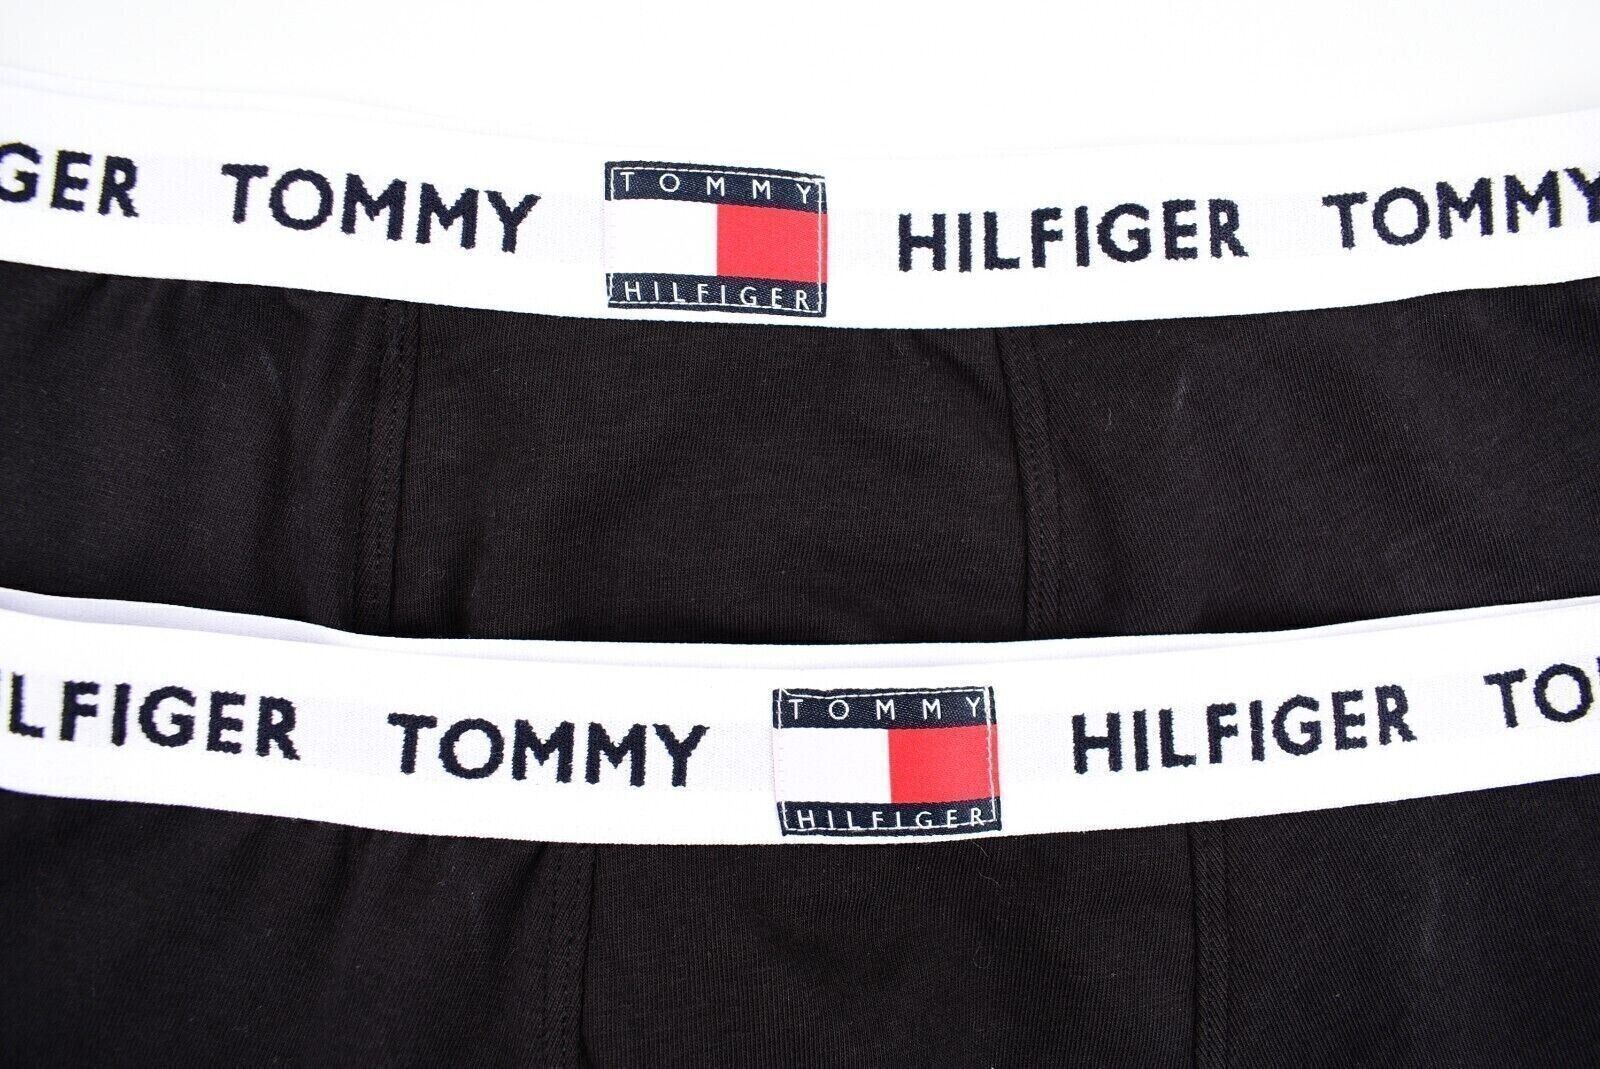 TOMMY HILFIGER - TOMMY 85 - Boys' 2-pk Boxer Trunks, Black, size 10-12 years